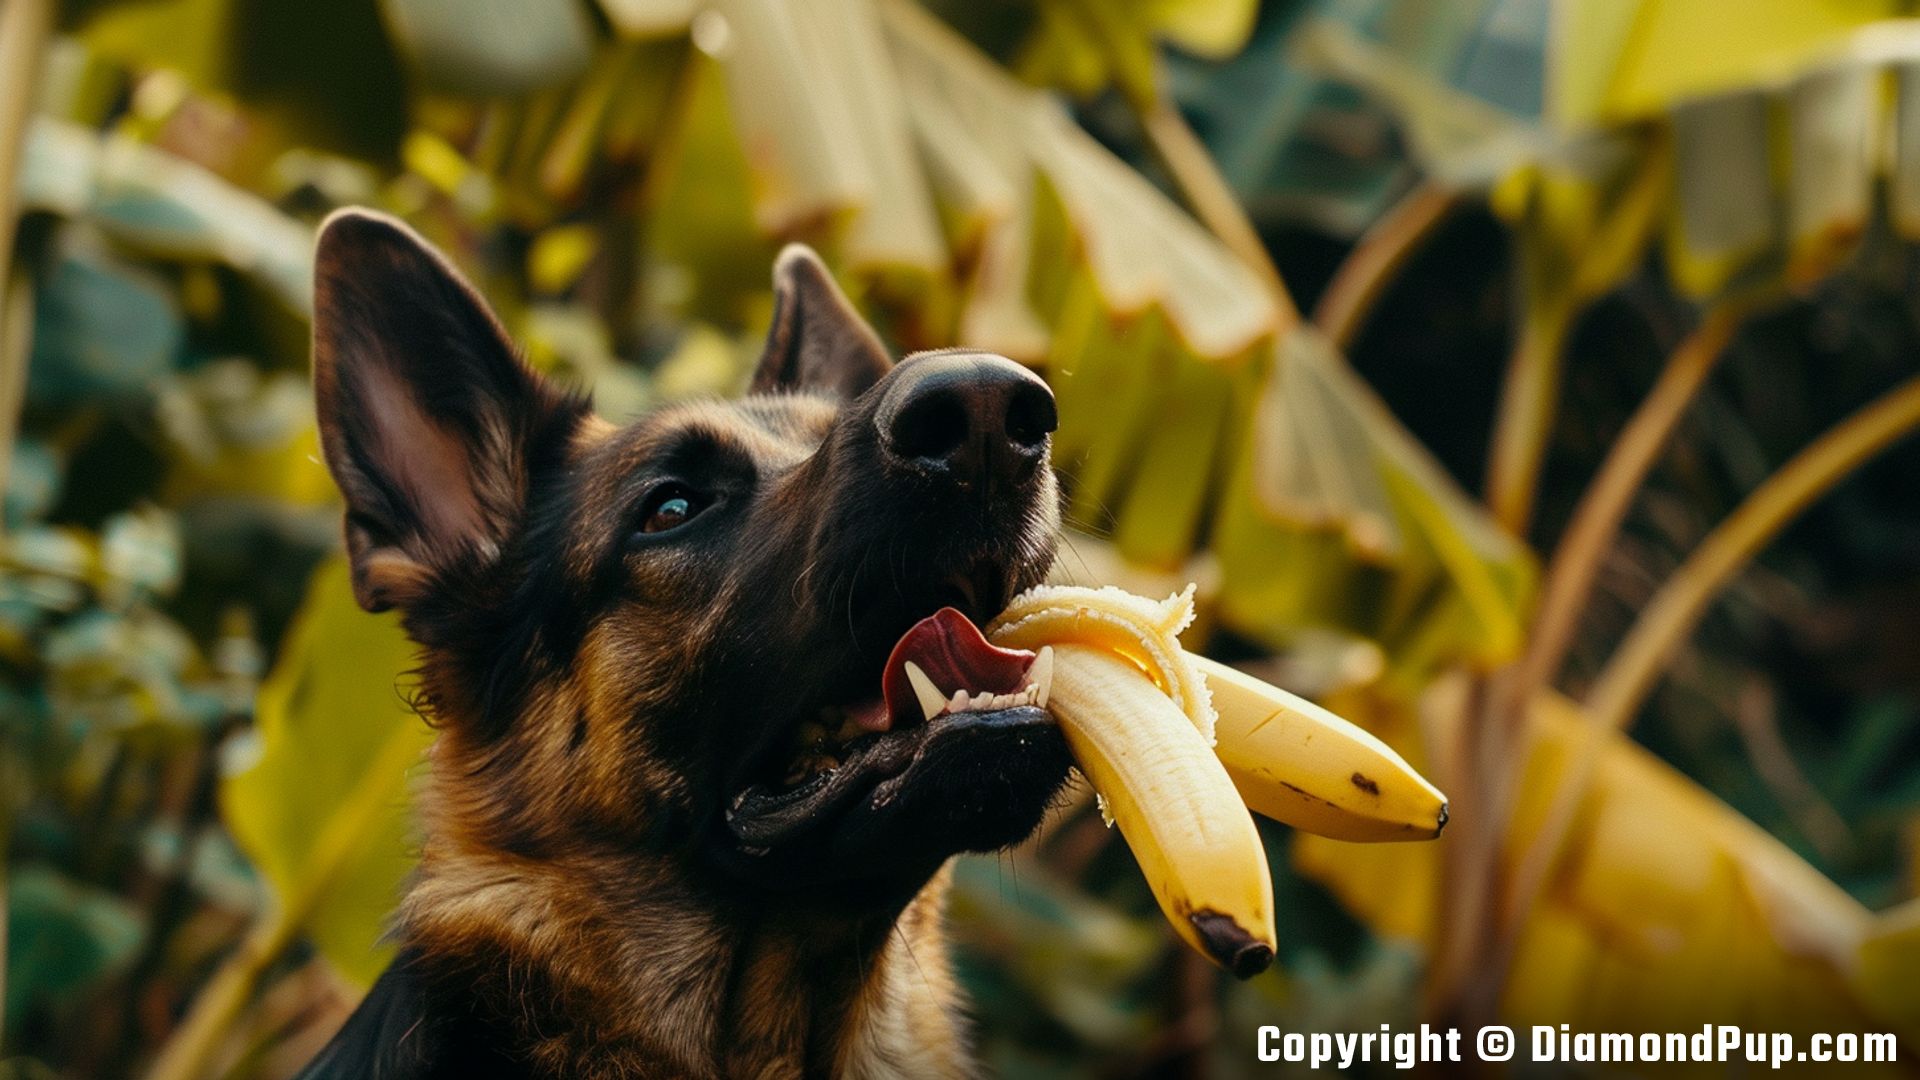 Photograph of a Playful German Shepherd Eating Banana